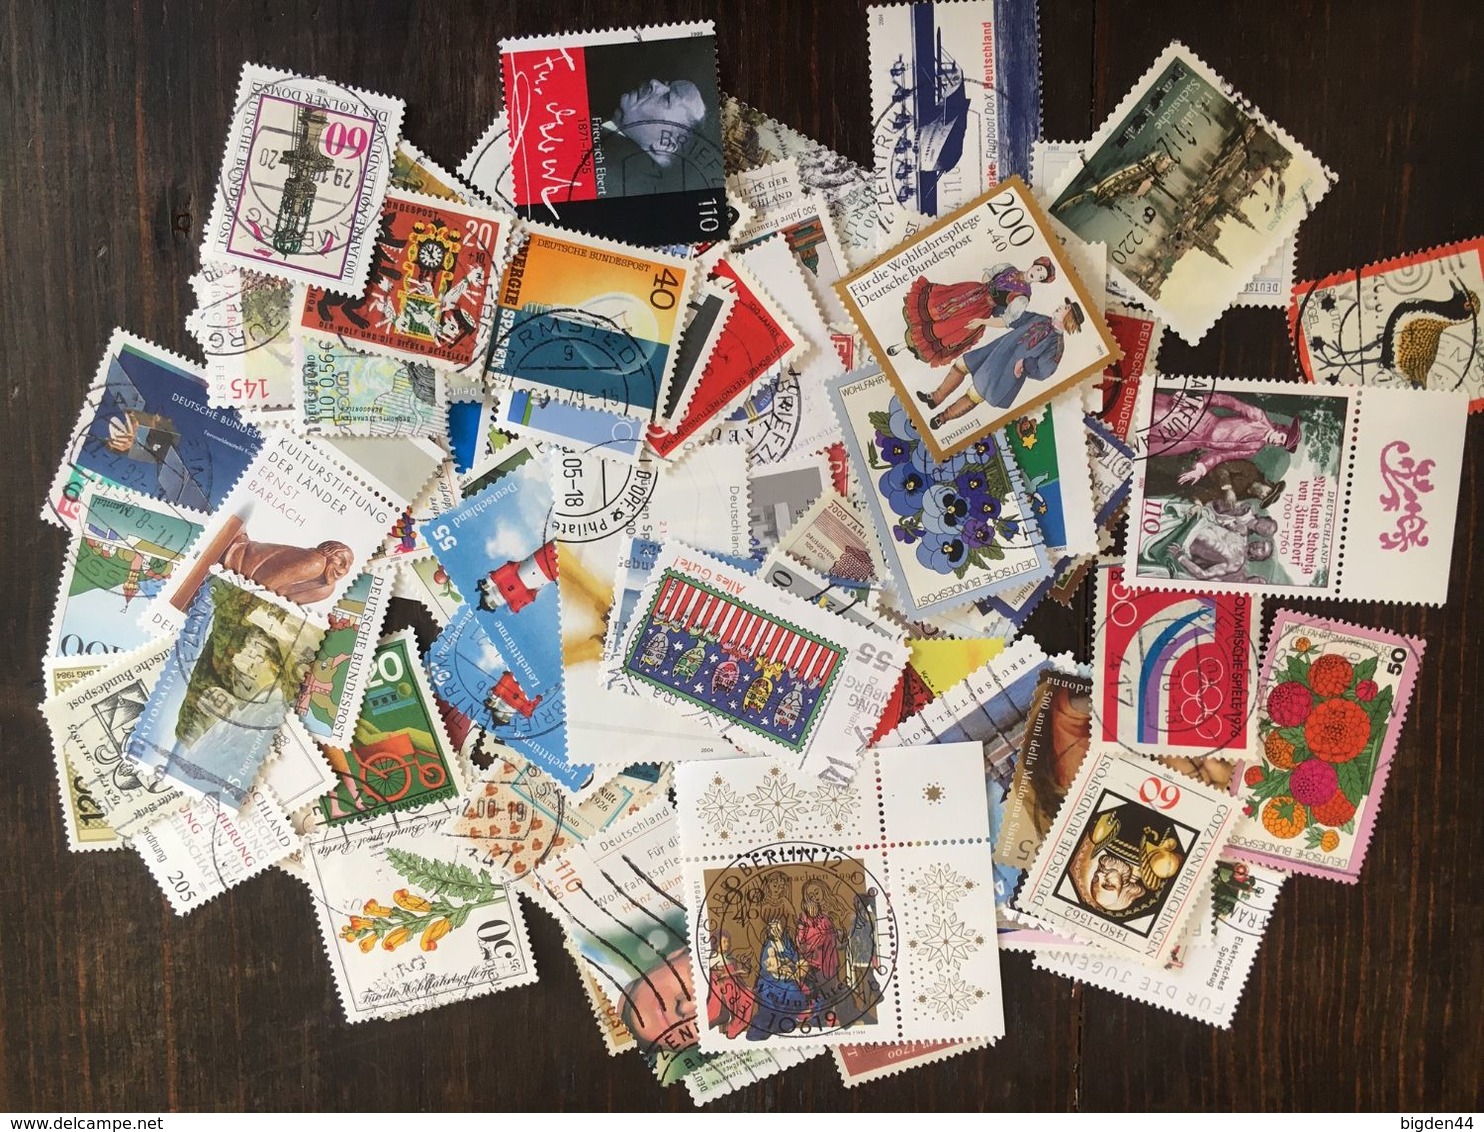 Lot 1000 timbres choisis chosen stamps Allemagne Deutschland Germany BRD